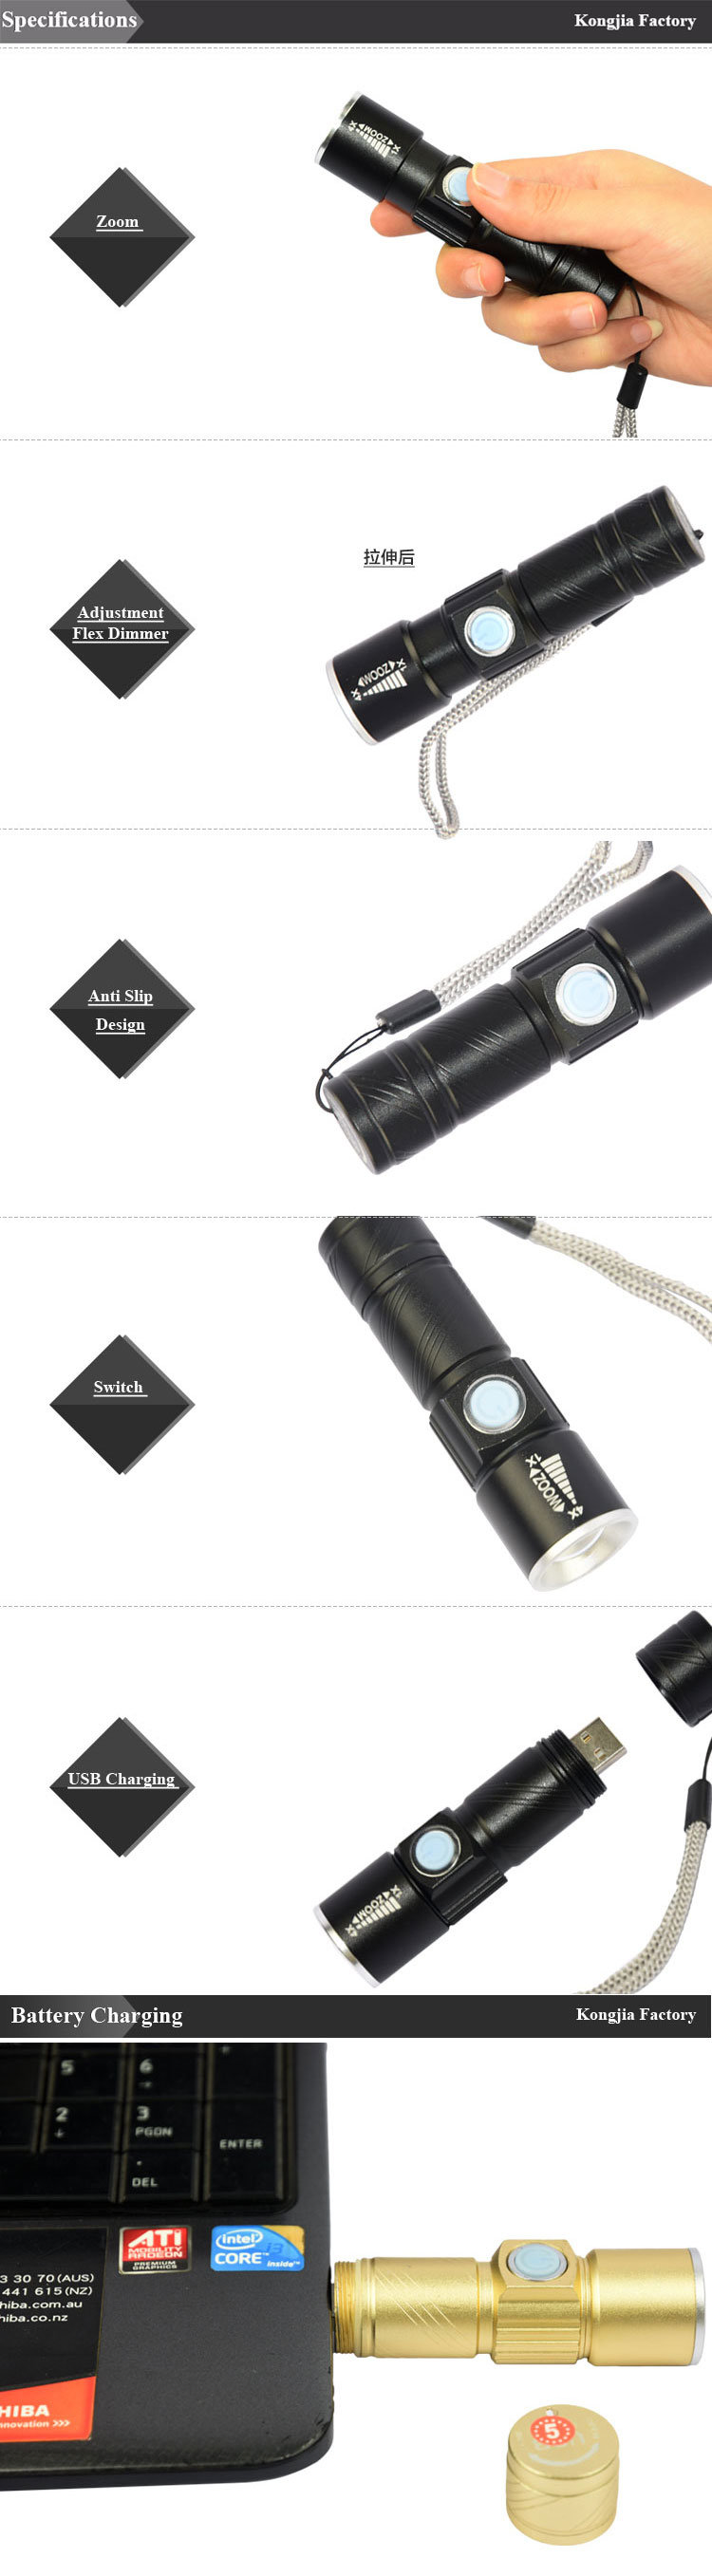 Pocket USB Rechargeable Bright Zoom LED Flashlight